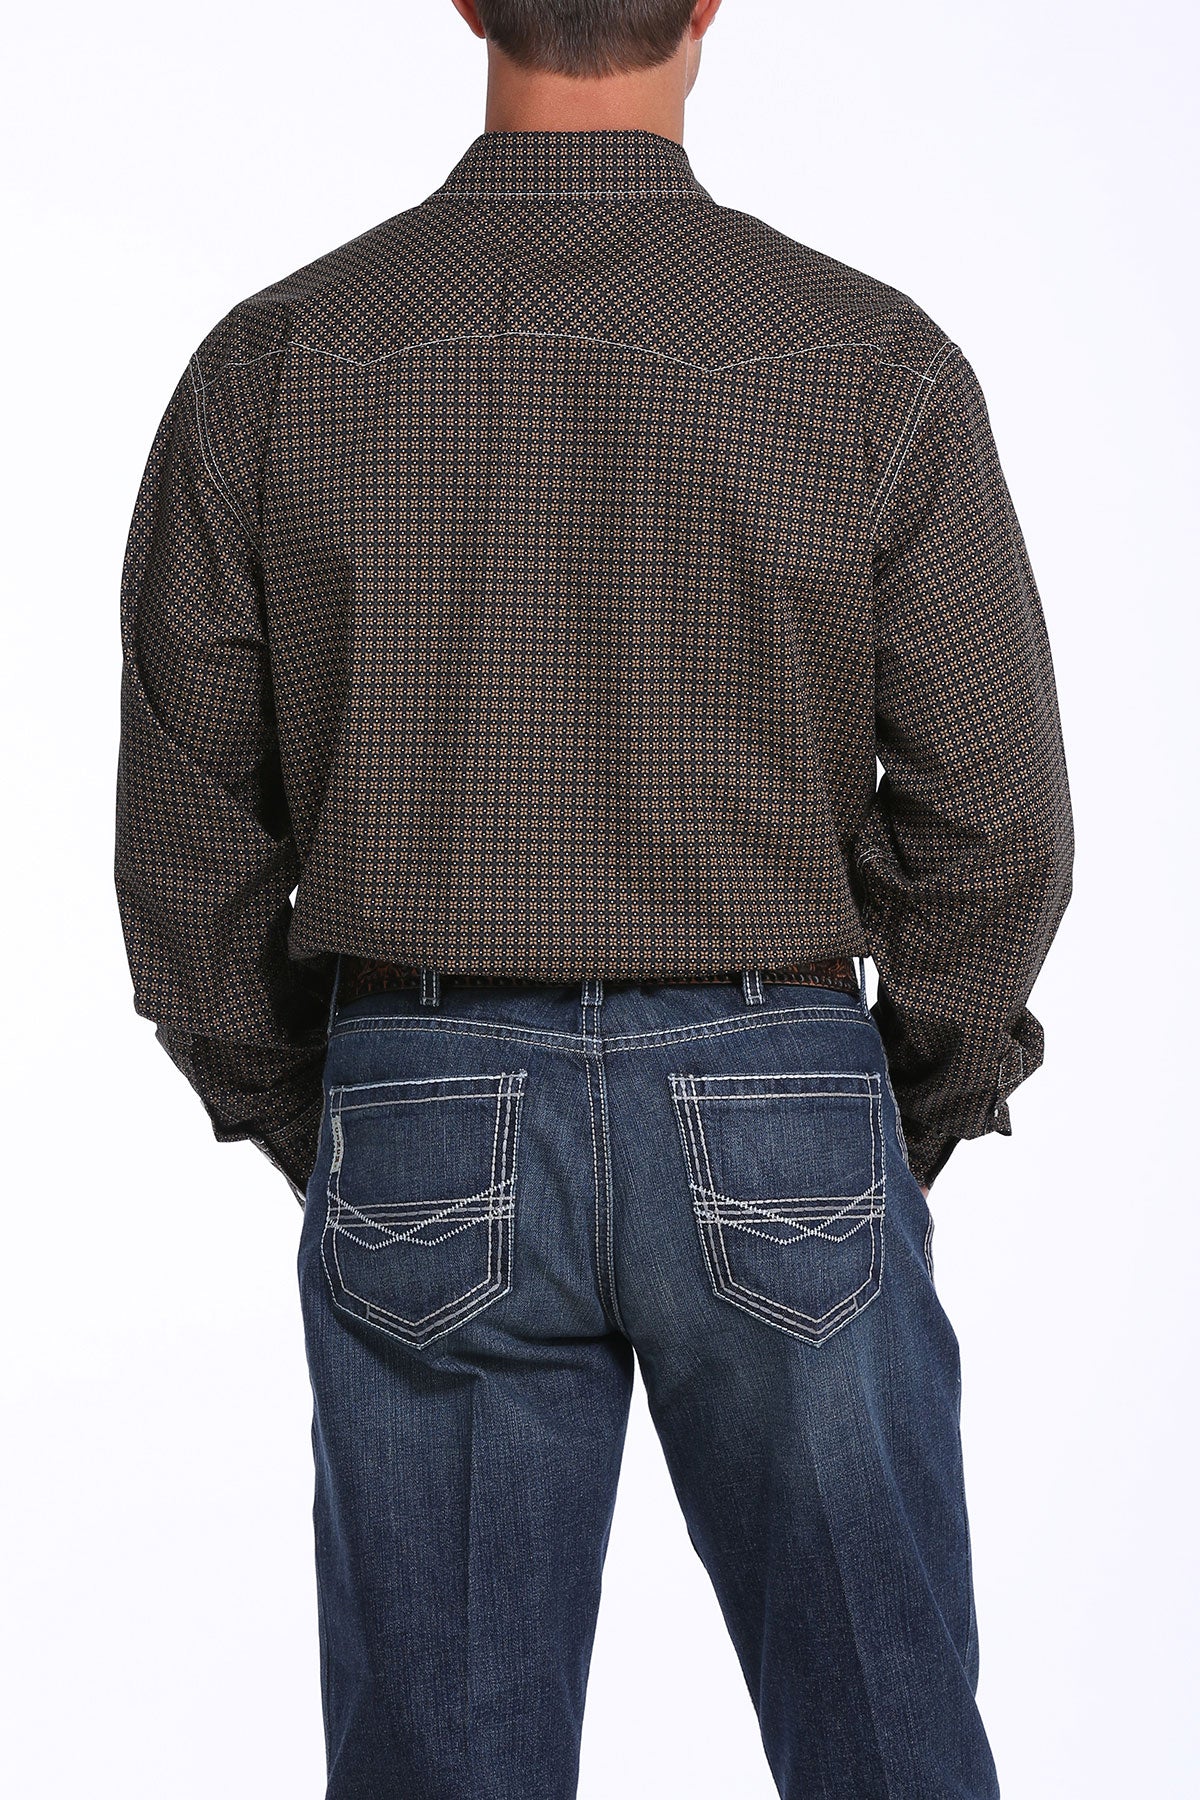 Cinch Men's Black & Khaki Long Sleeve Western Shirt